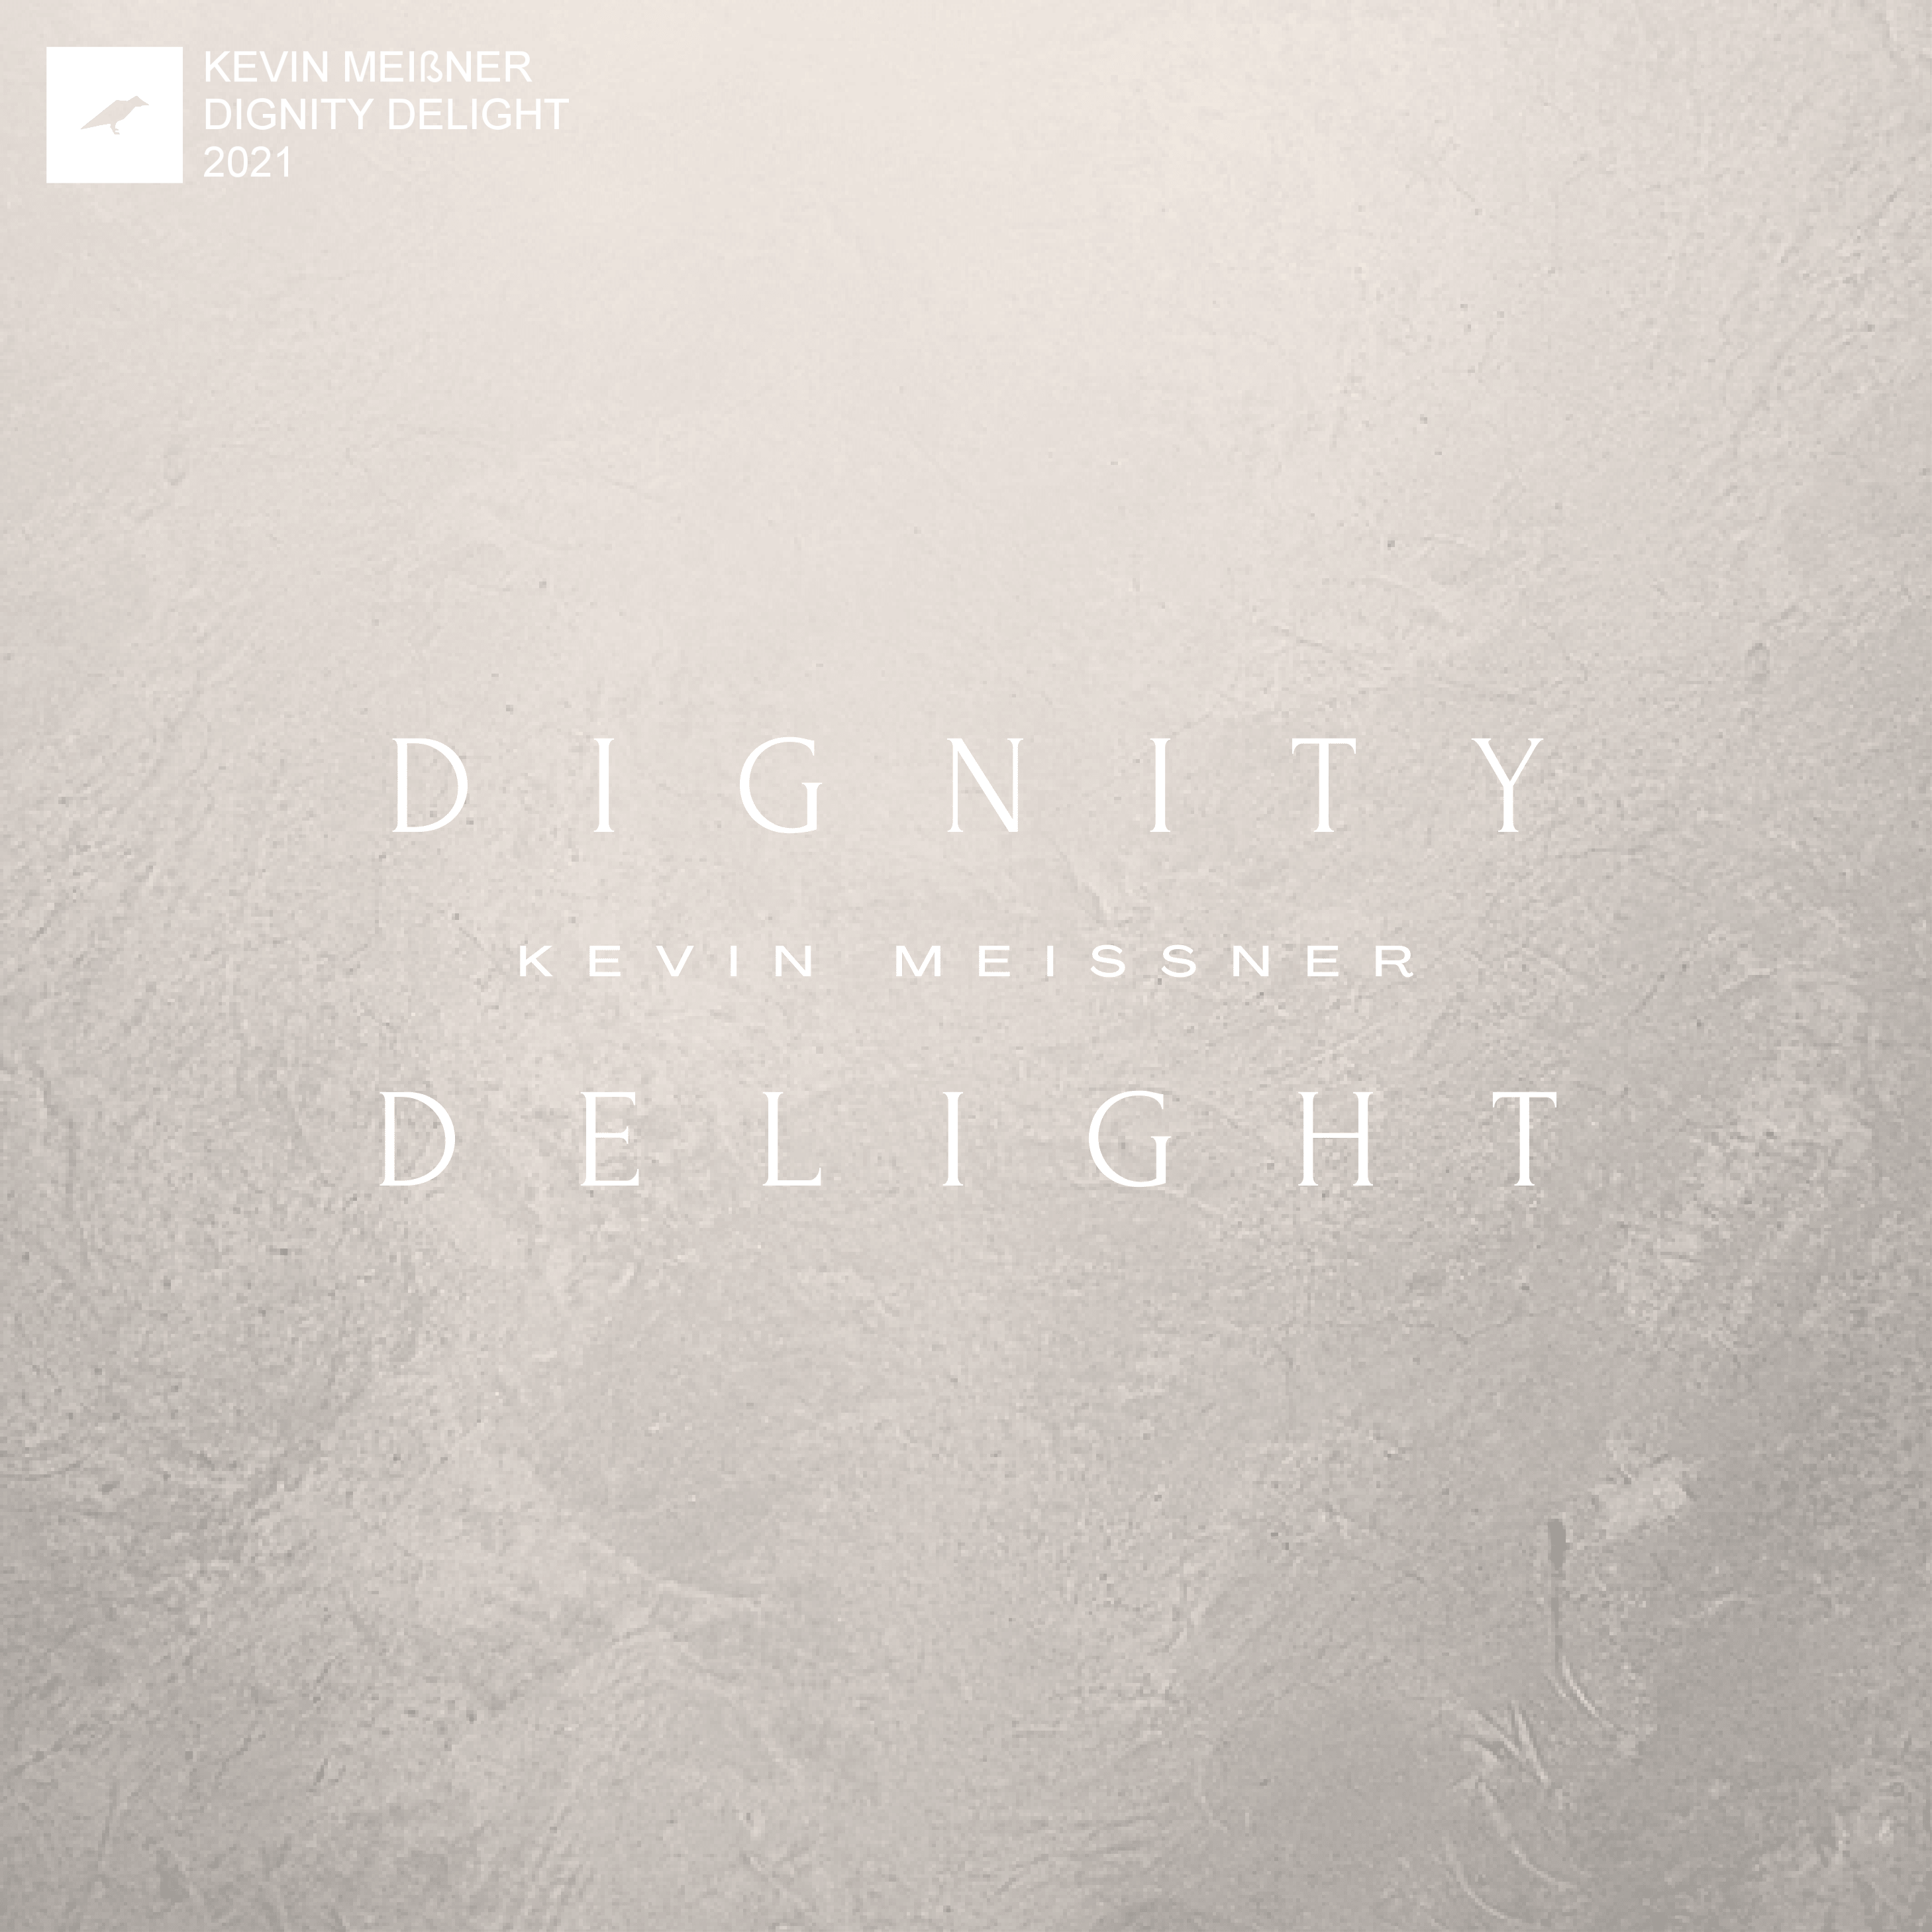 Kevin Meißner Dignity Delight Cover Art